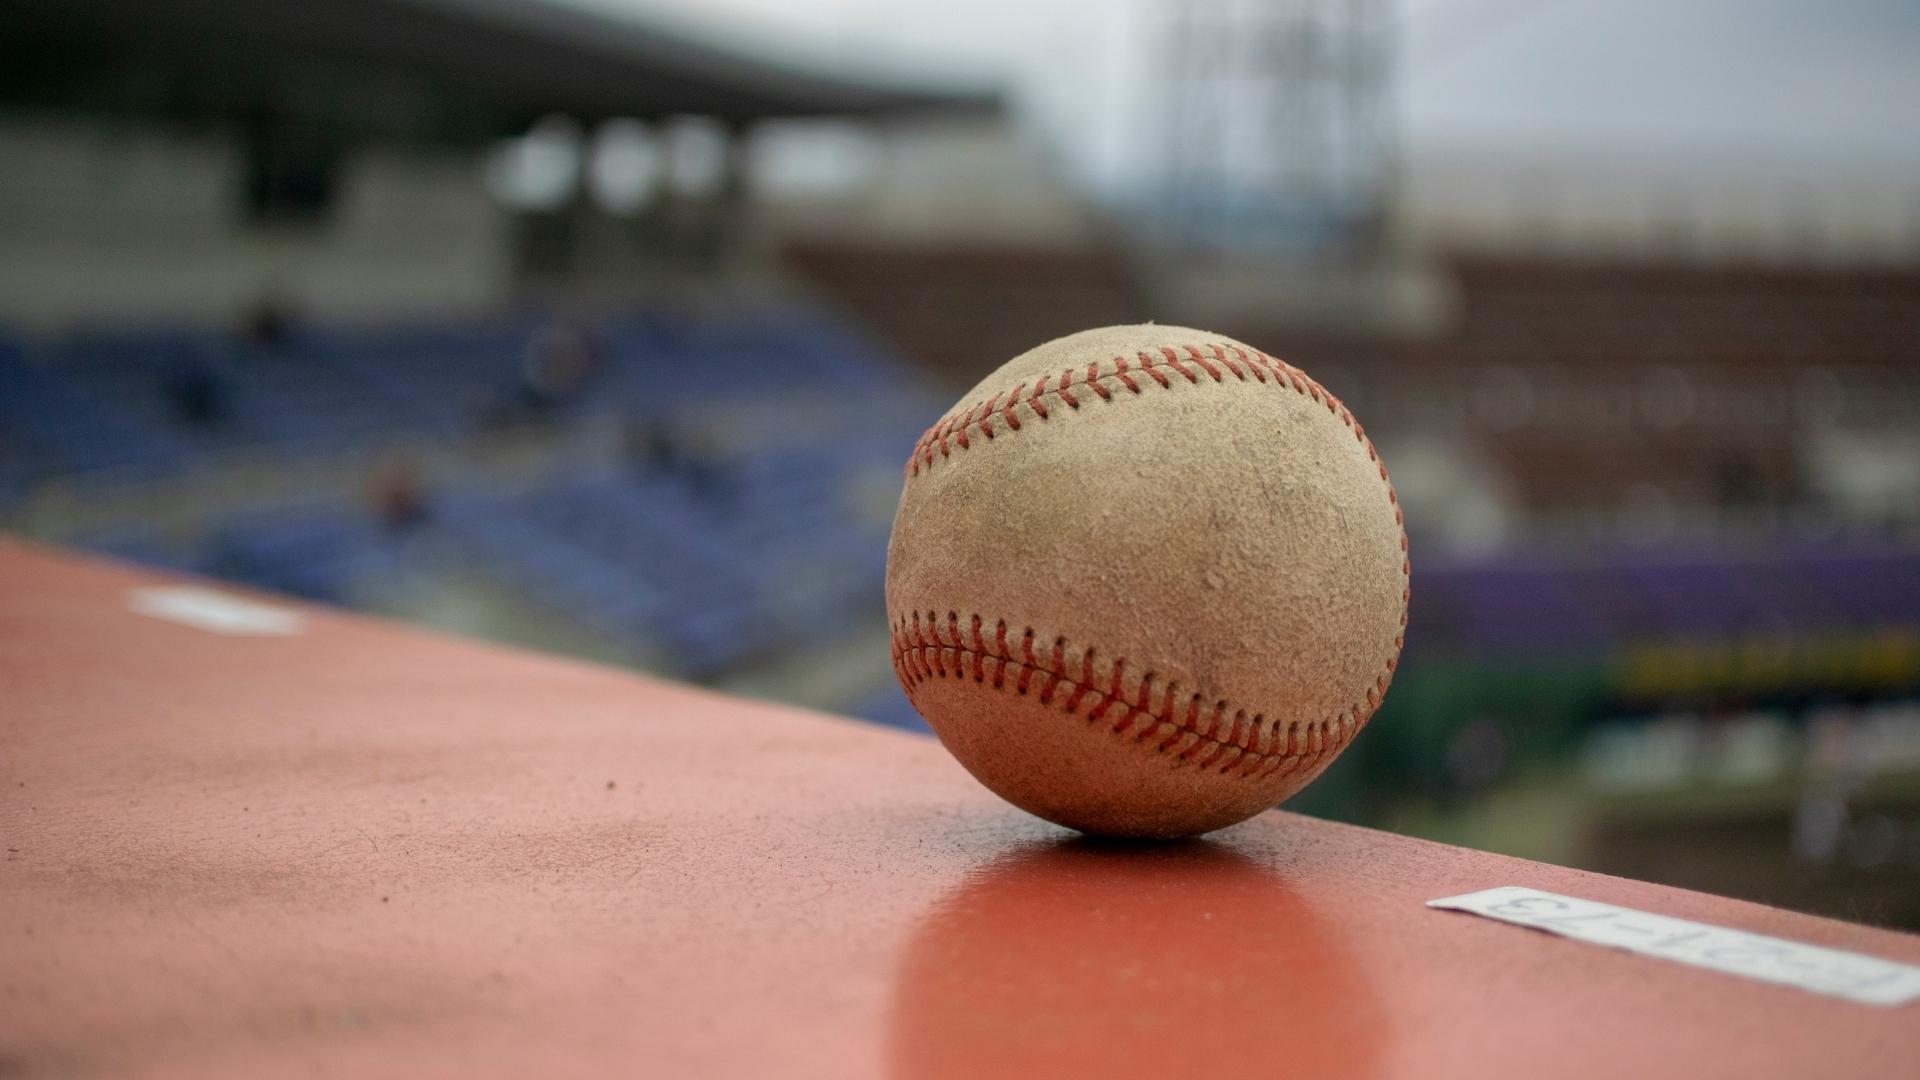 Imagen de referencia de pelota de béisbol en estadio. Foto: Shutterstock